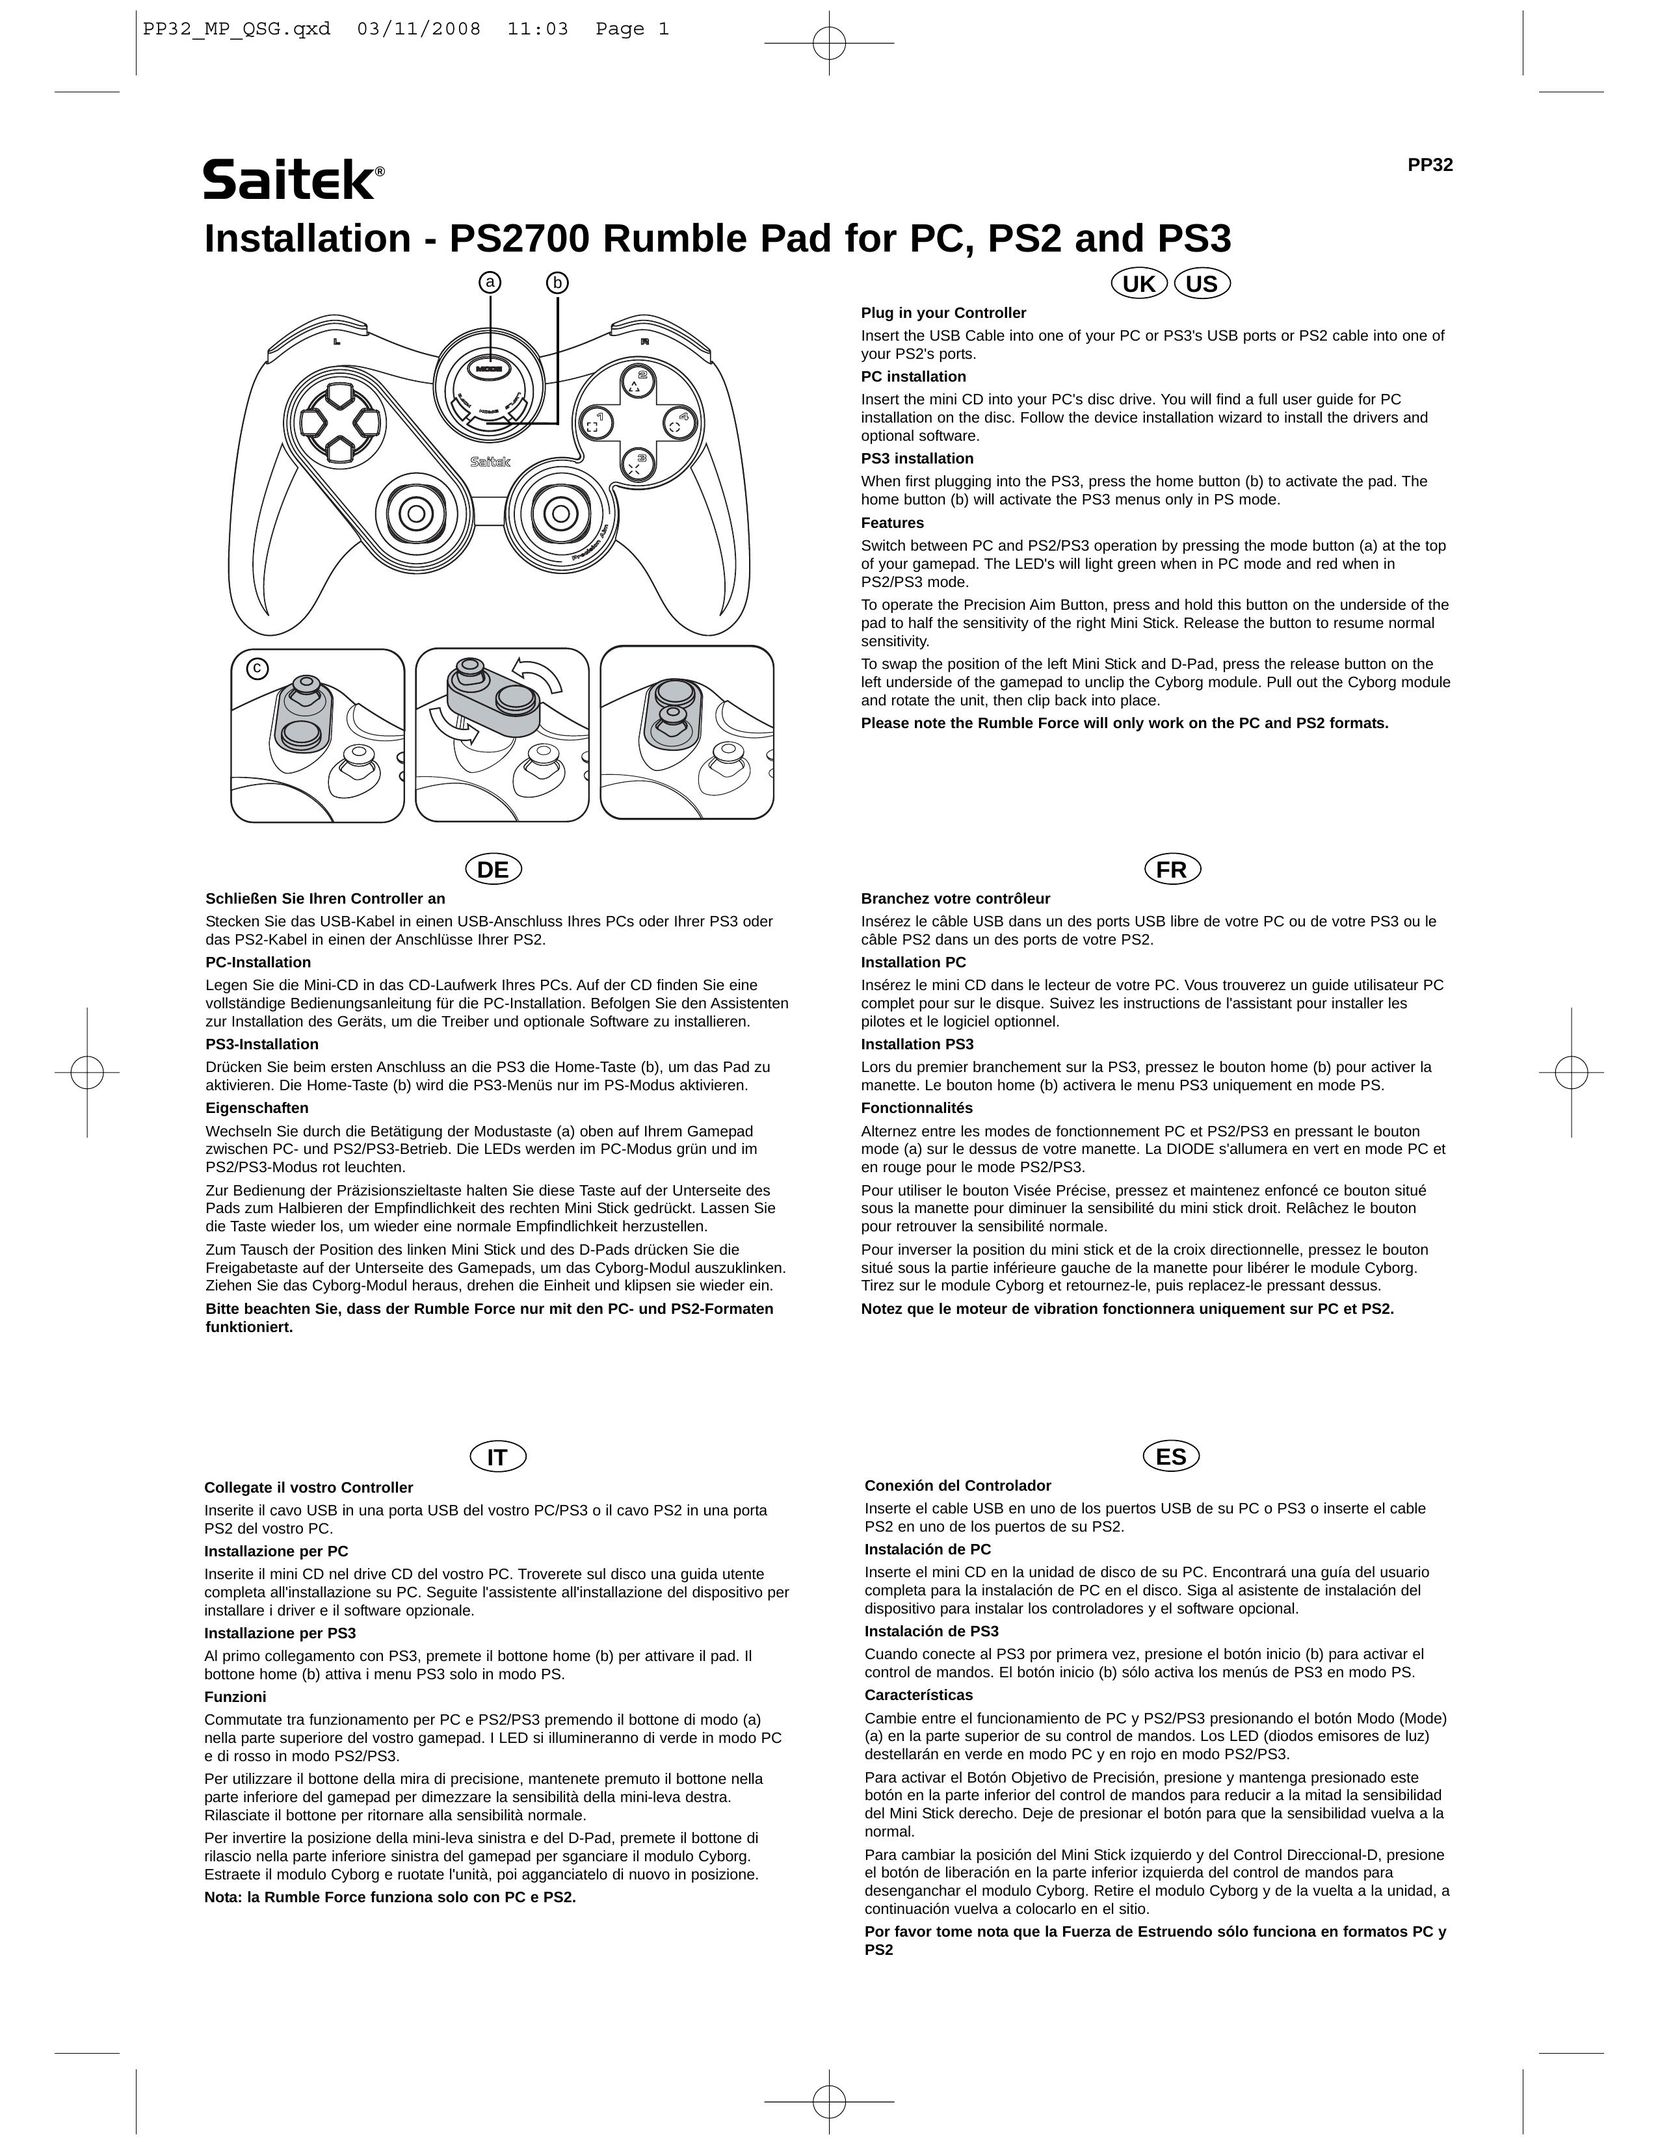 Saitek PS2700 Video Game Controller User Manual